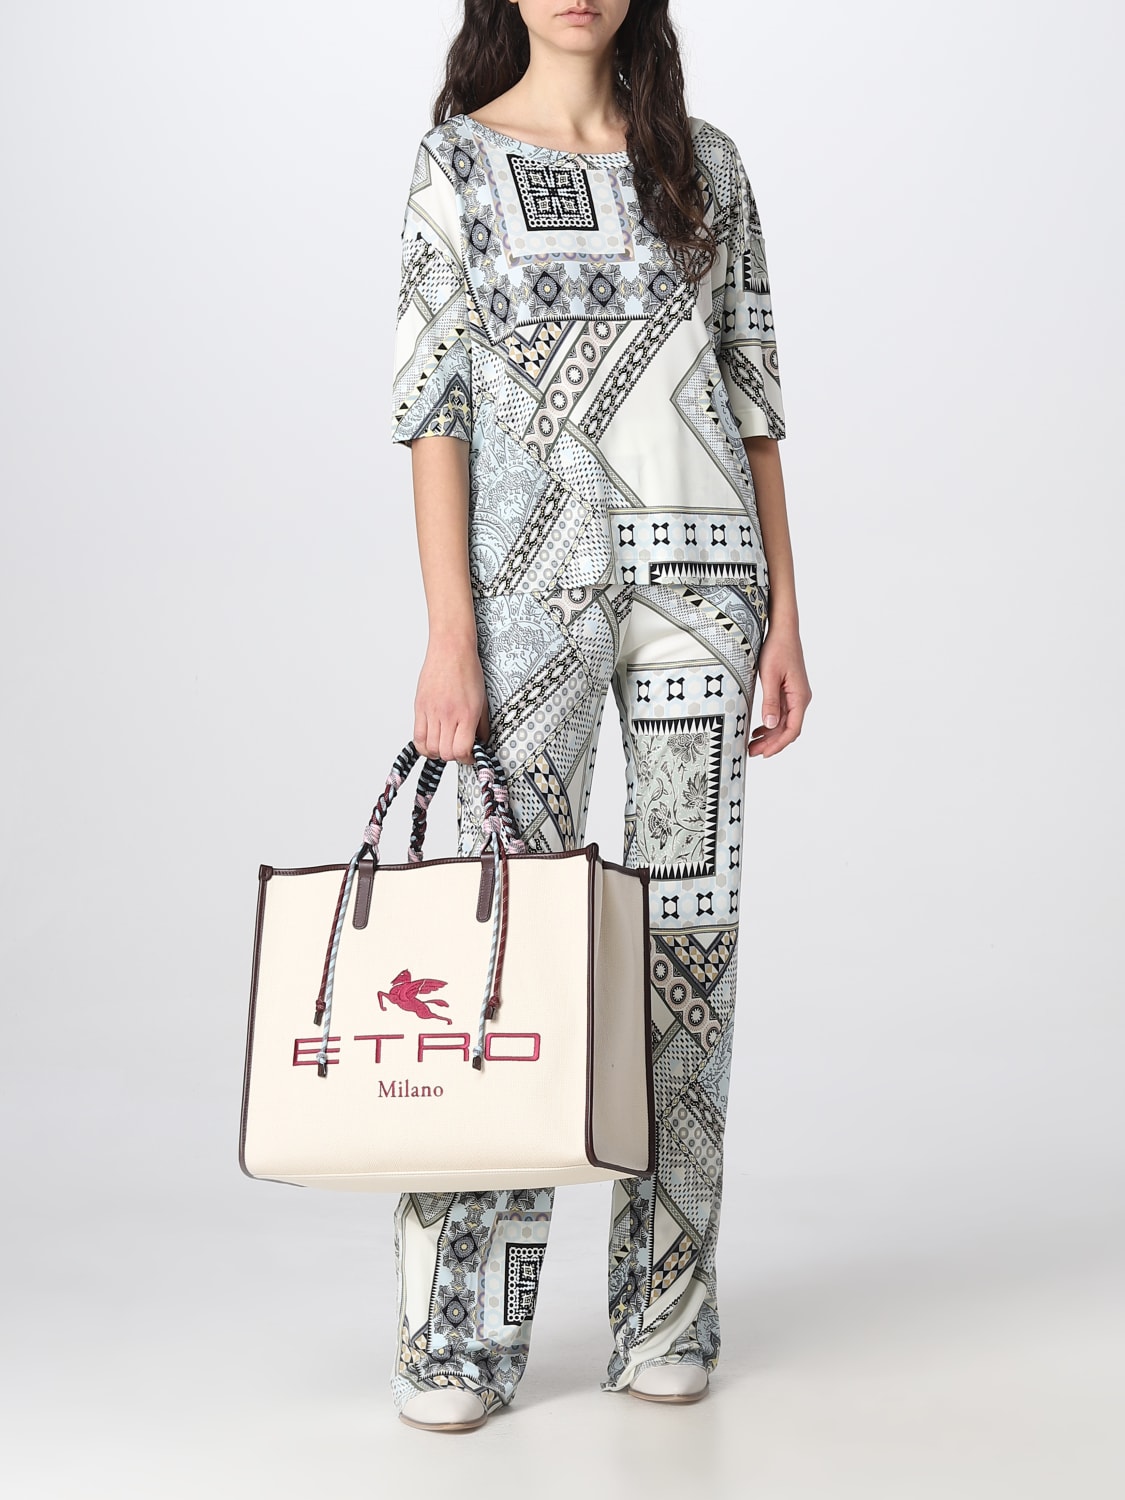 ETRO Women Bags - Vestiaire Collective